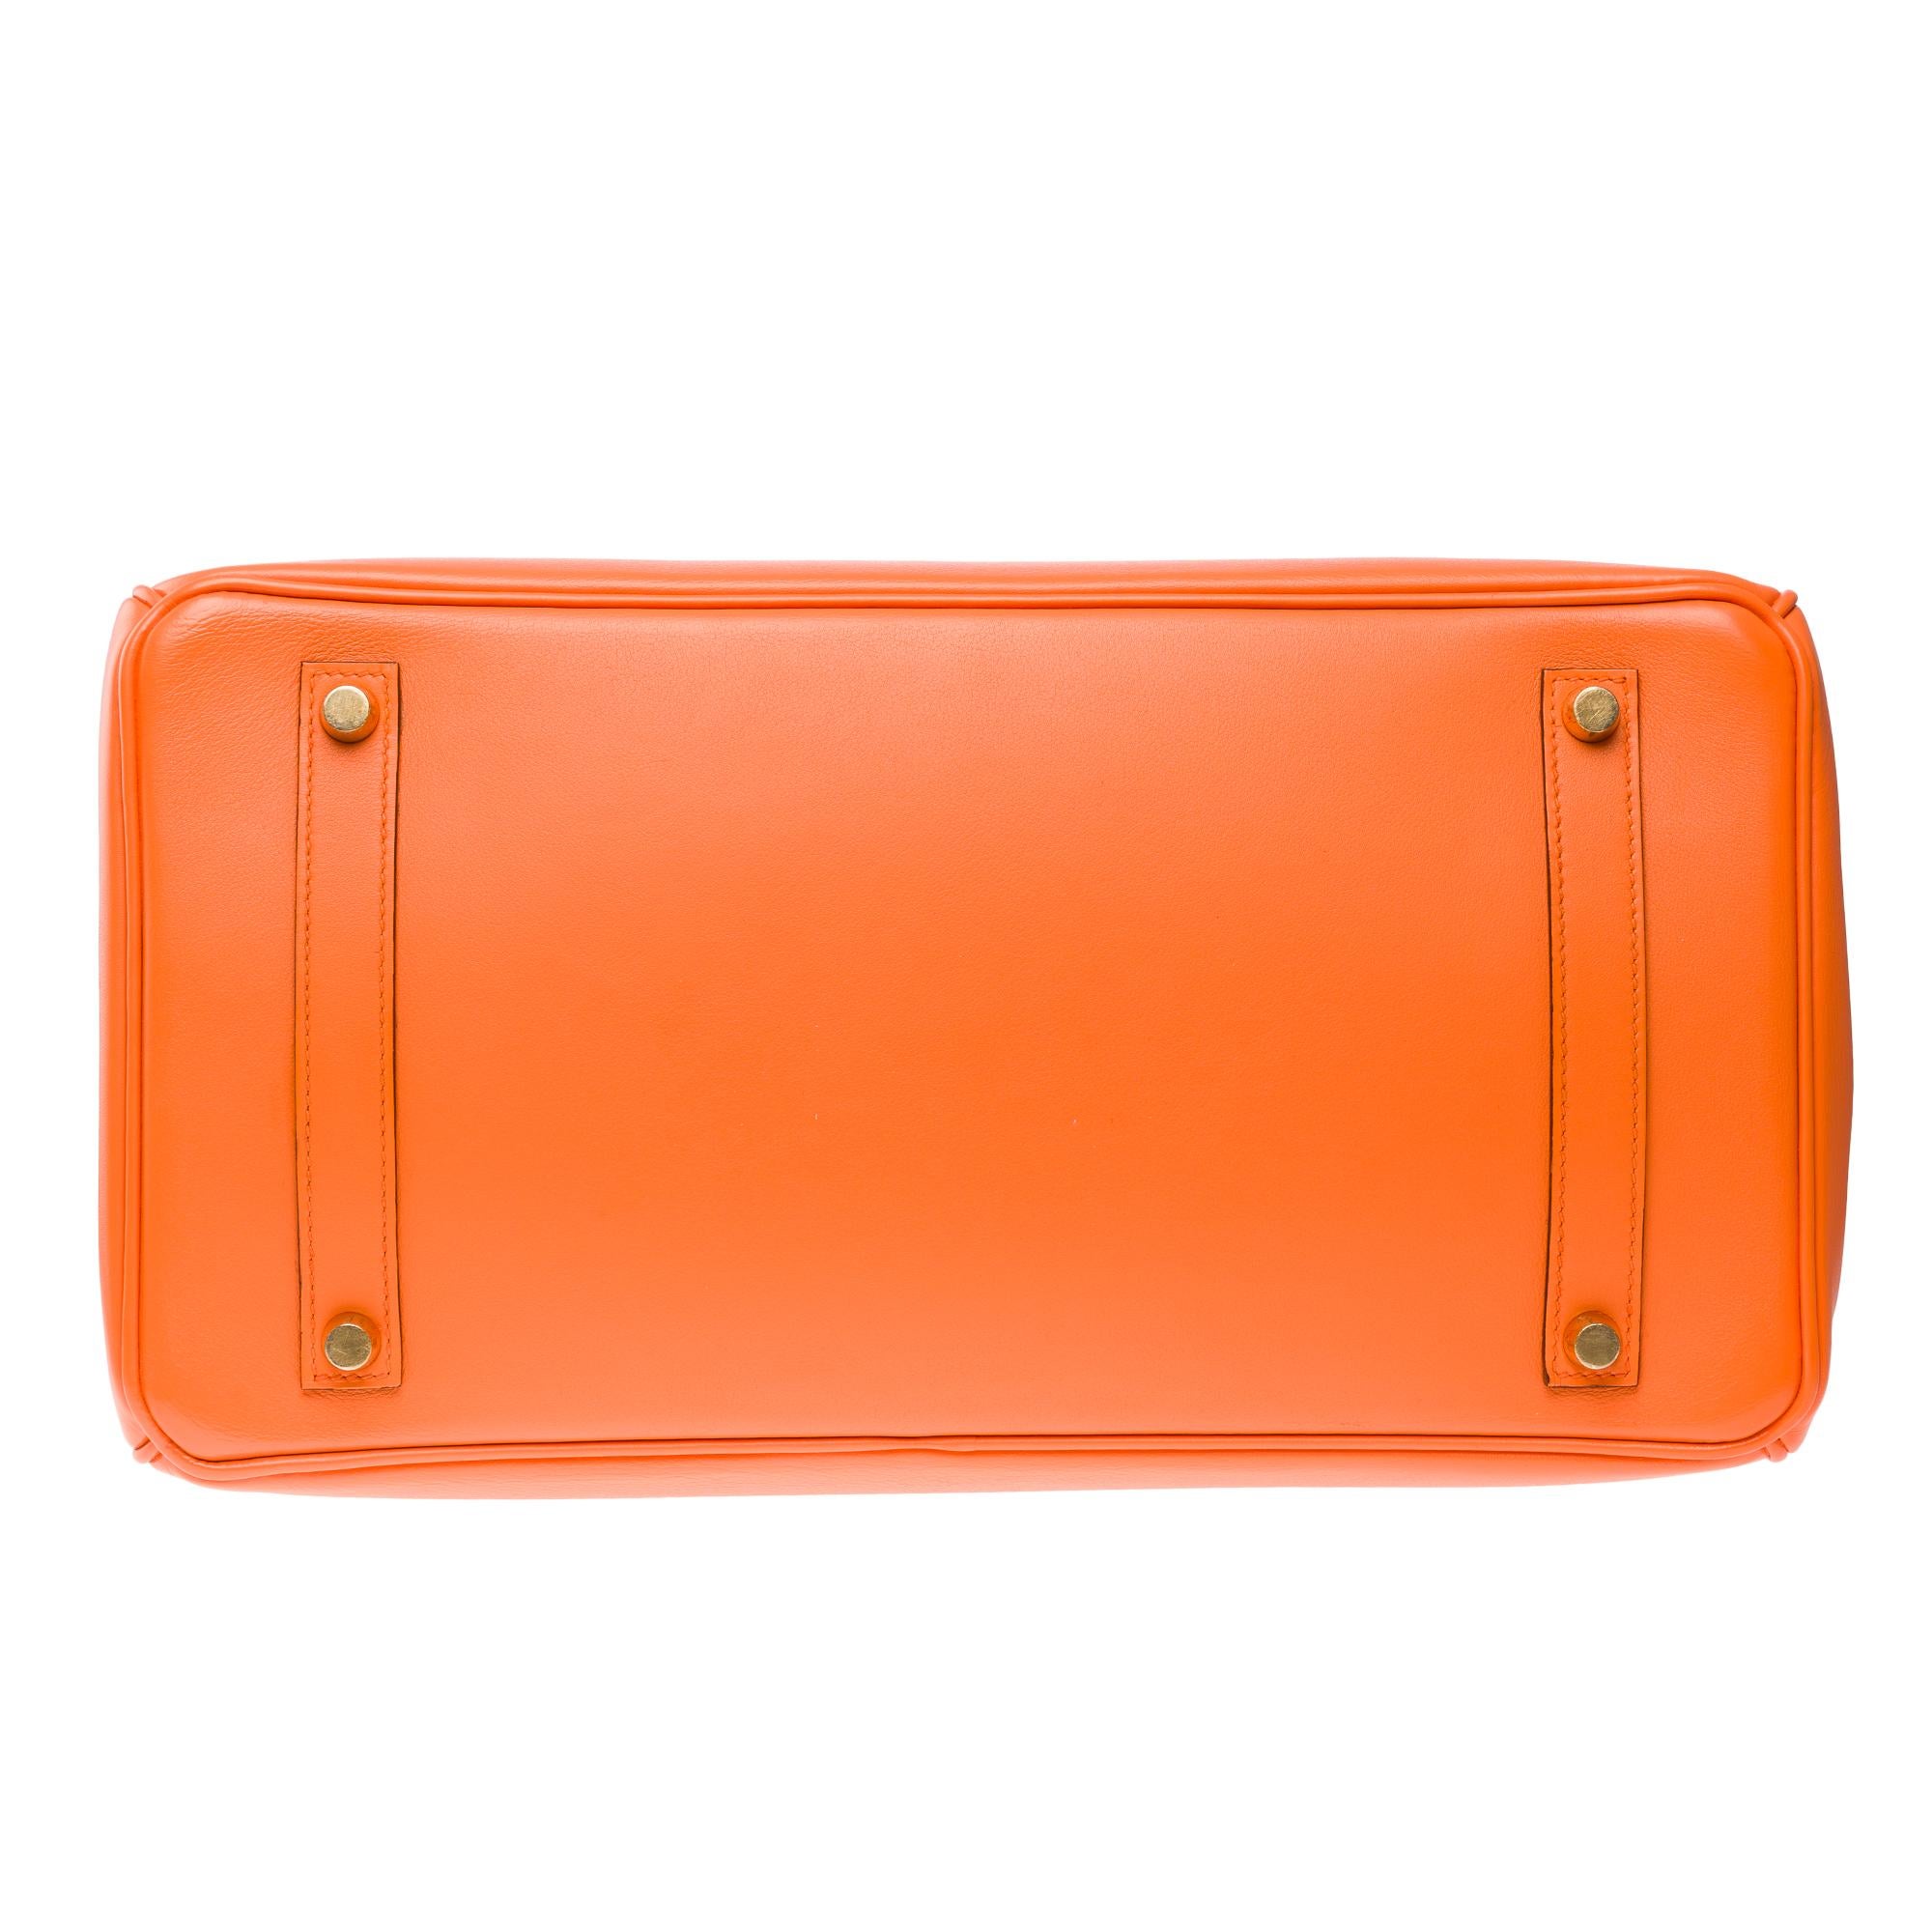 Amazing Hermès Birkin 35 handbag in Orange Swift Calf leather, GHW 7